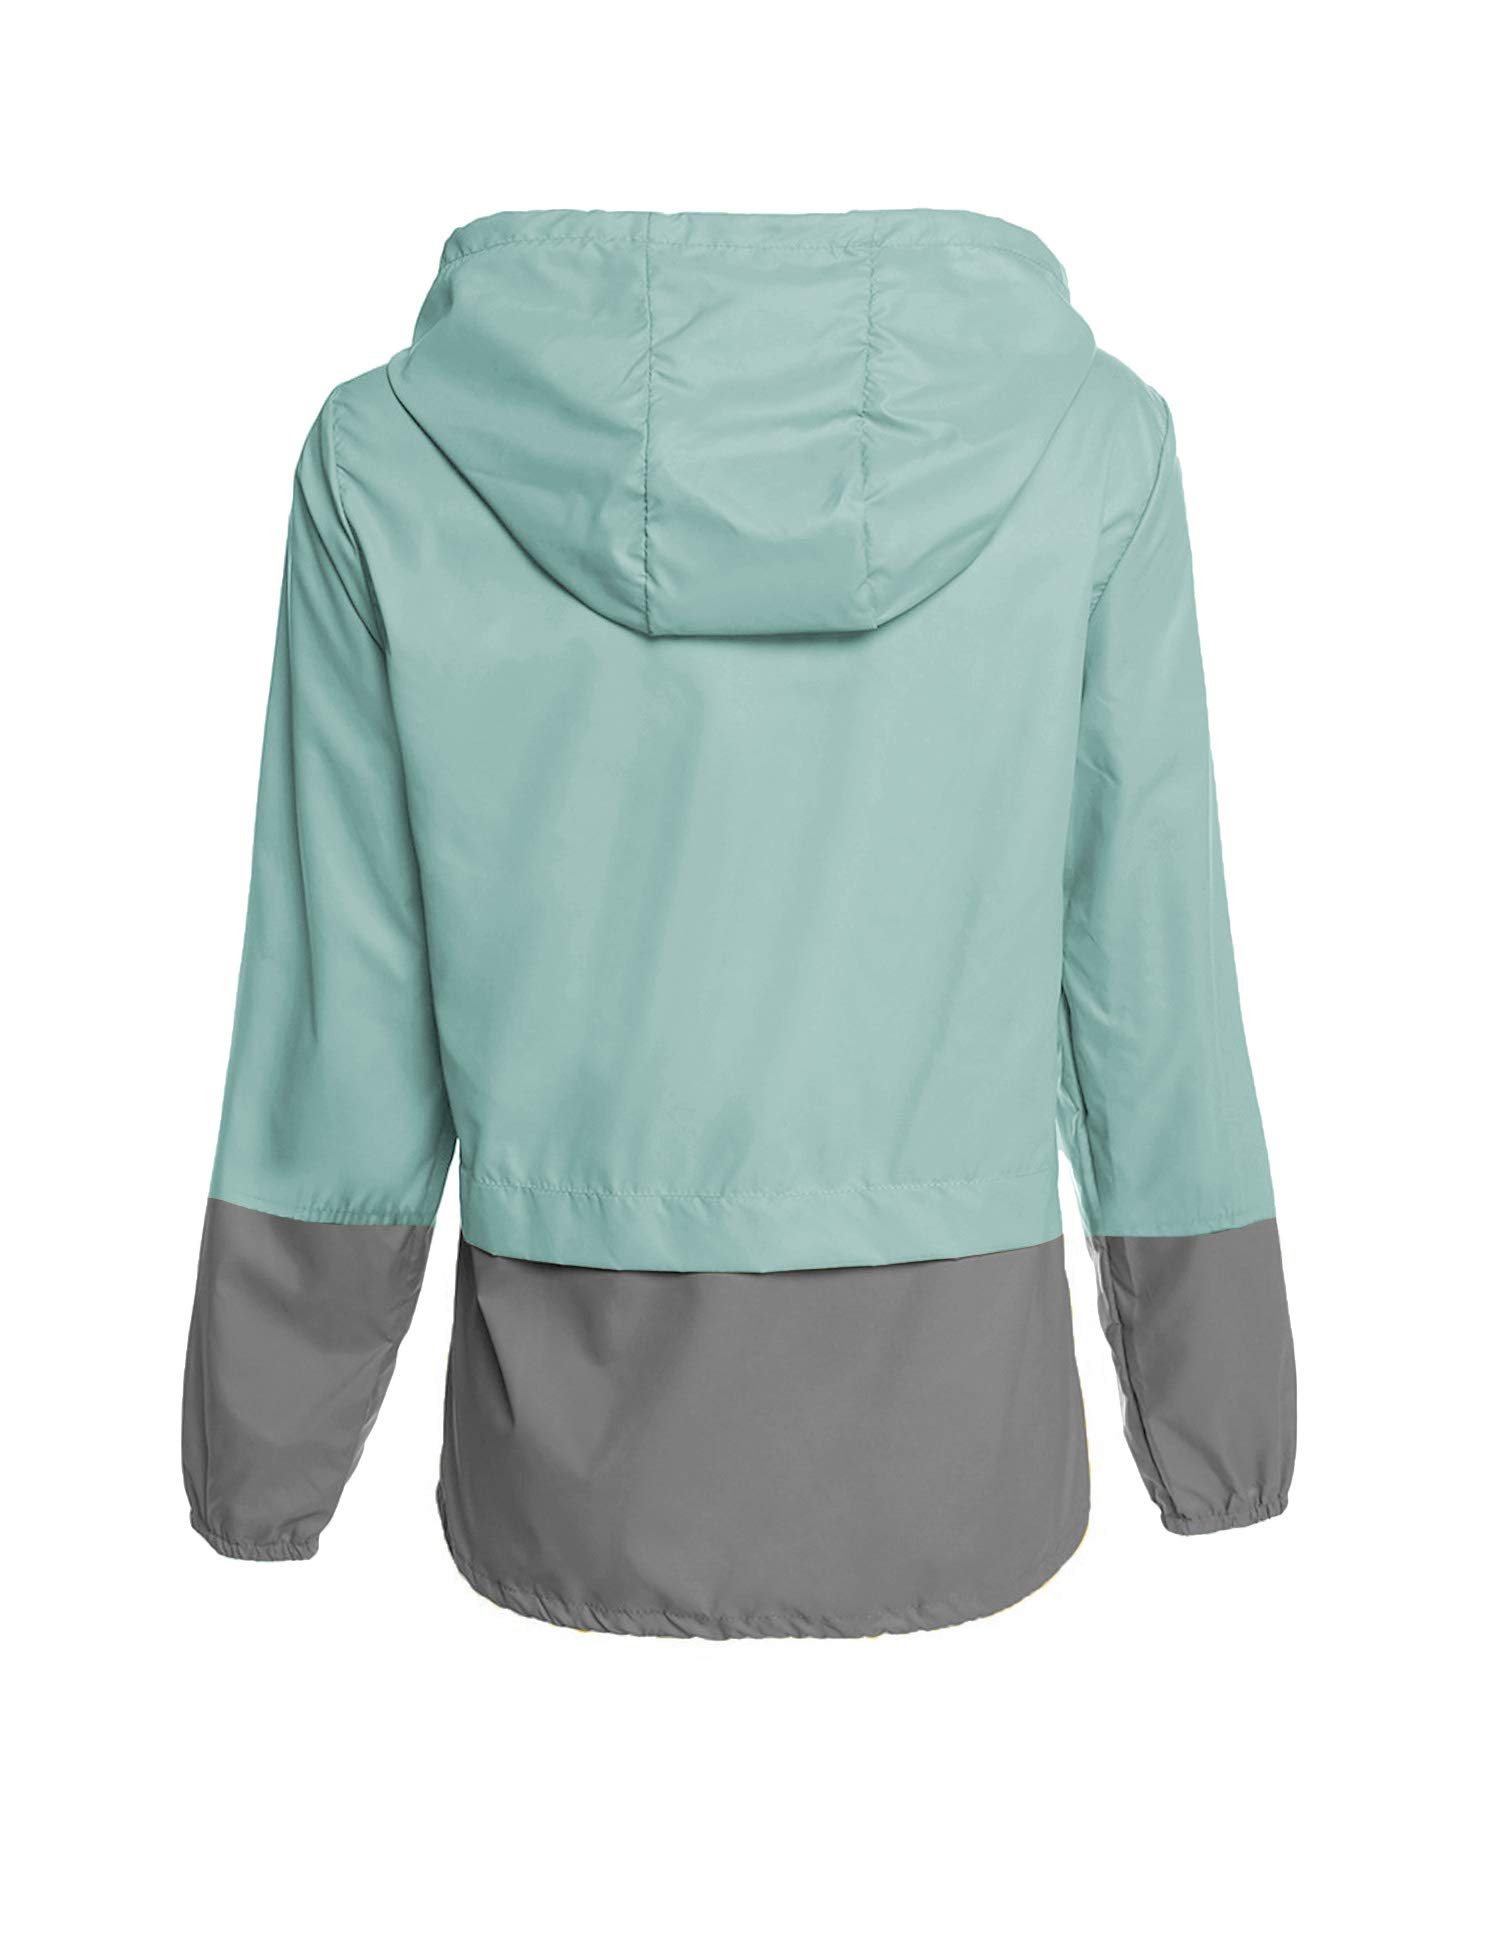 Avoogue Lightweight Raincoat Women's Waterproof Windbreaker Packable Outdoor Hooded Rain Jacket Light Blue XXL